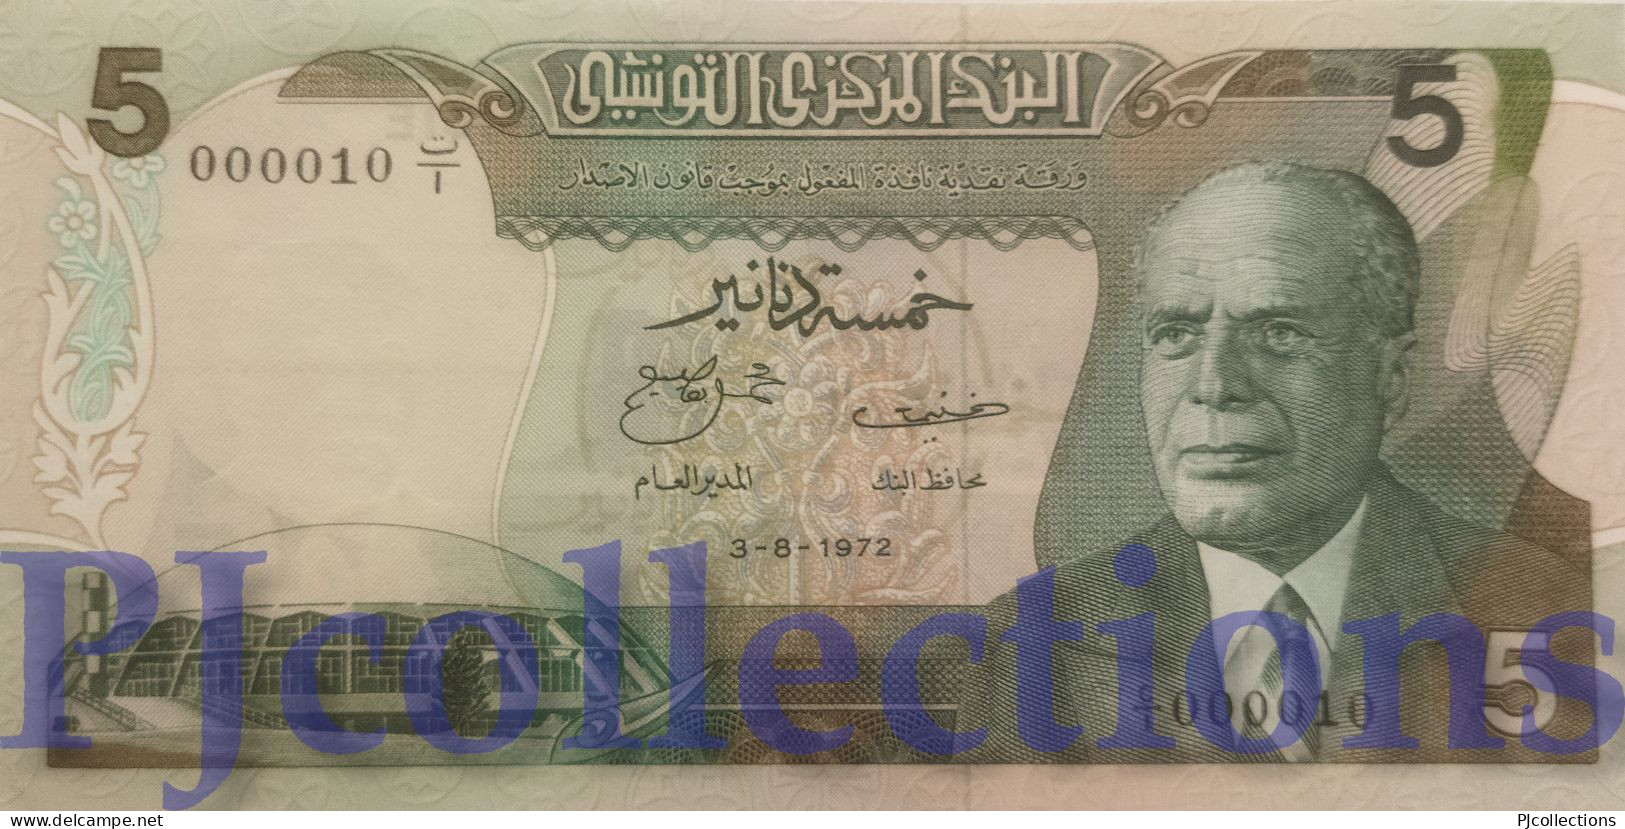 TUNISIA 5 DINARS 1972 PICK 68a AUNC VERY LOW & GOOD SERIAL NUMBER "C/1 000010" - Tunisie